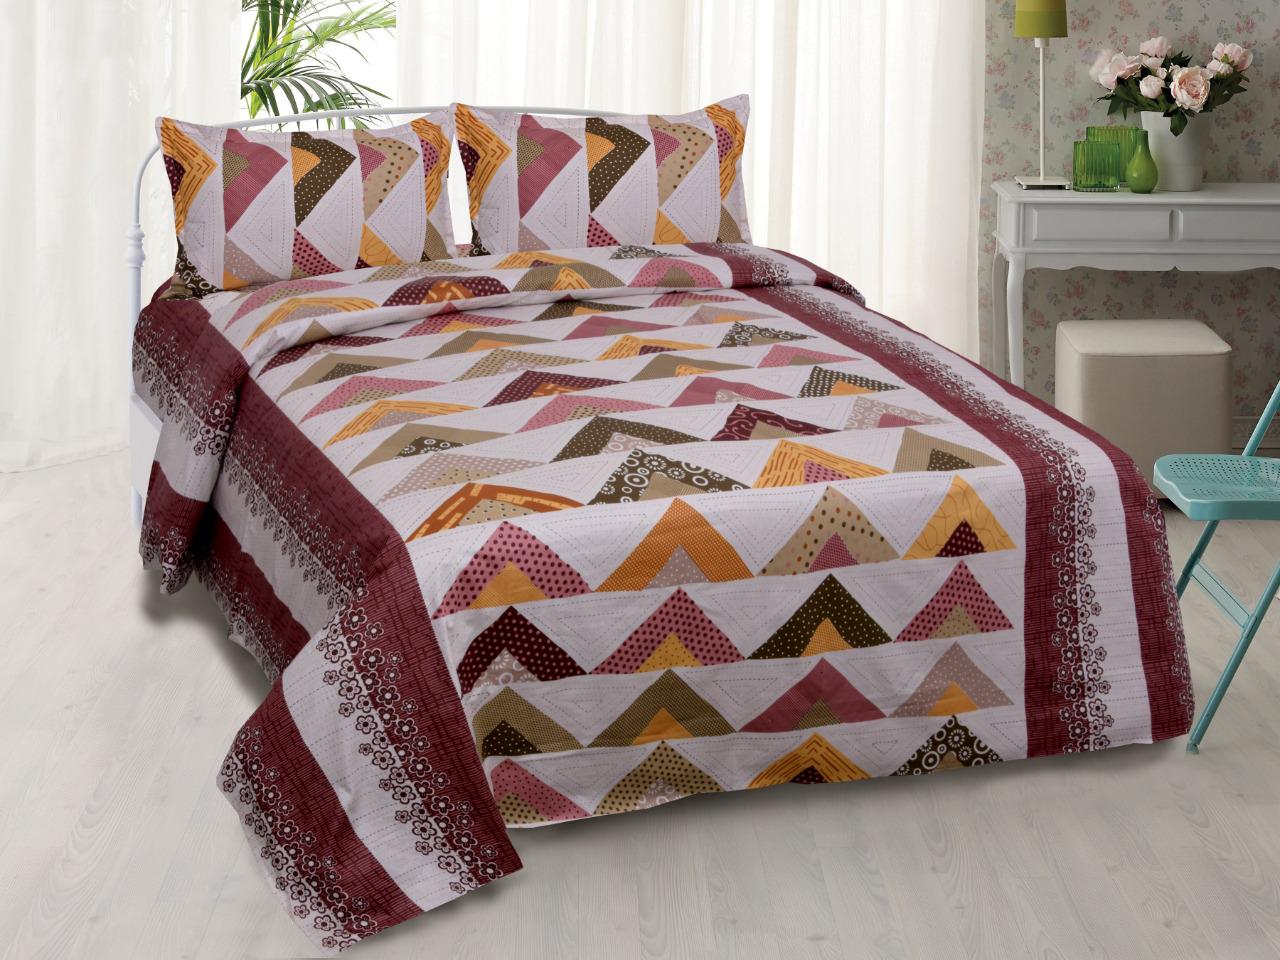 Designer Multi Color Triangle Print King Size Cotton Bed Sheet